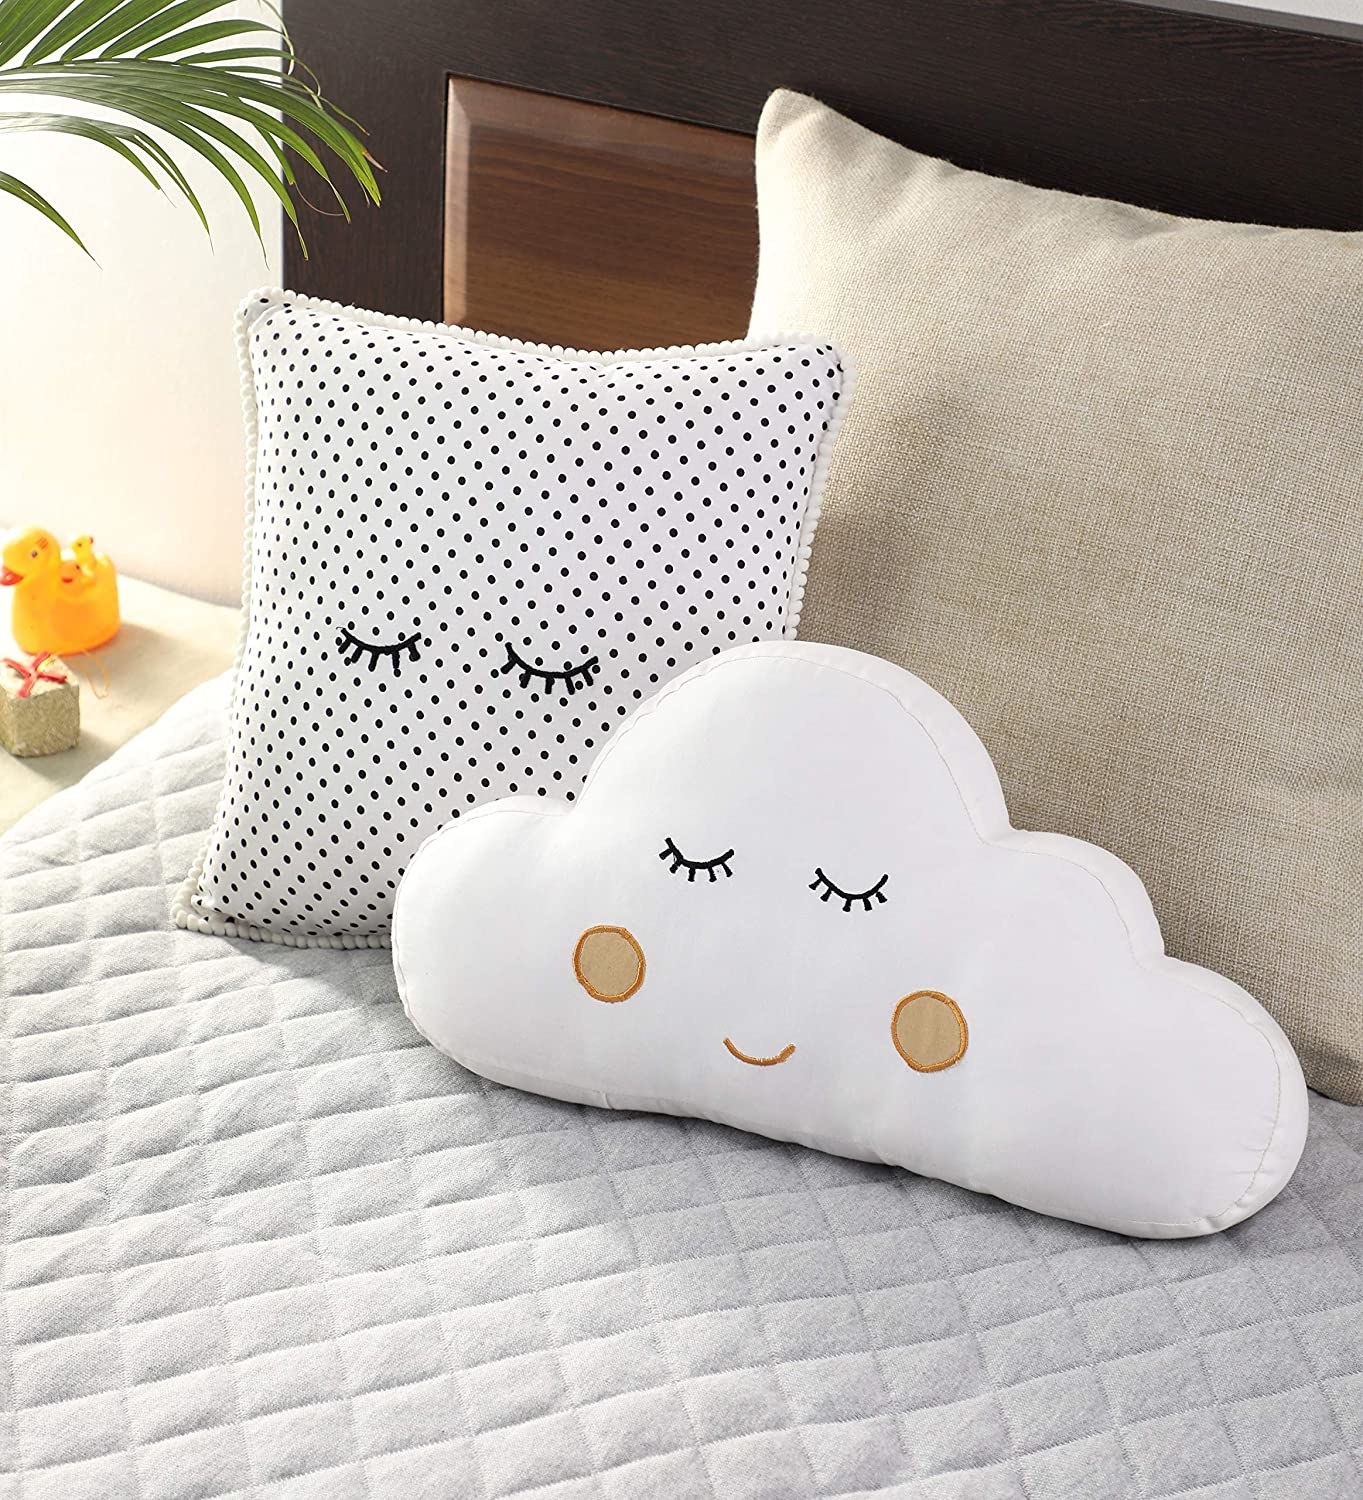 A cloud-shaped cushion, and a square-shaped cushion with a polka dot design.